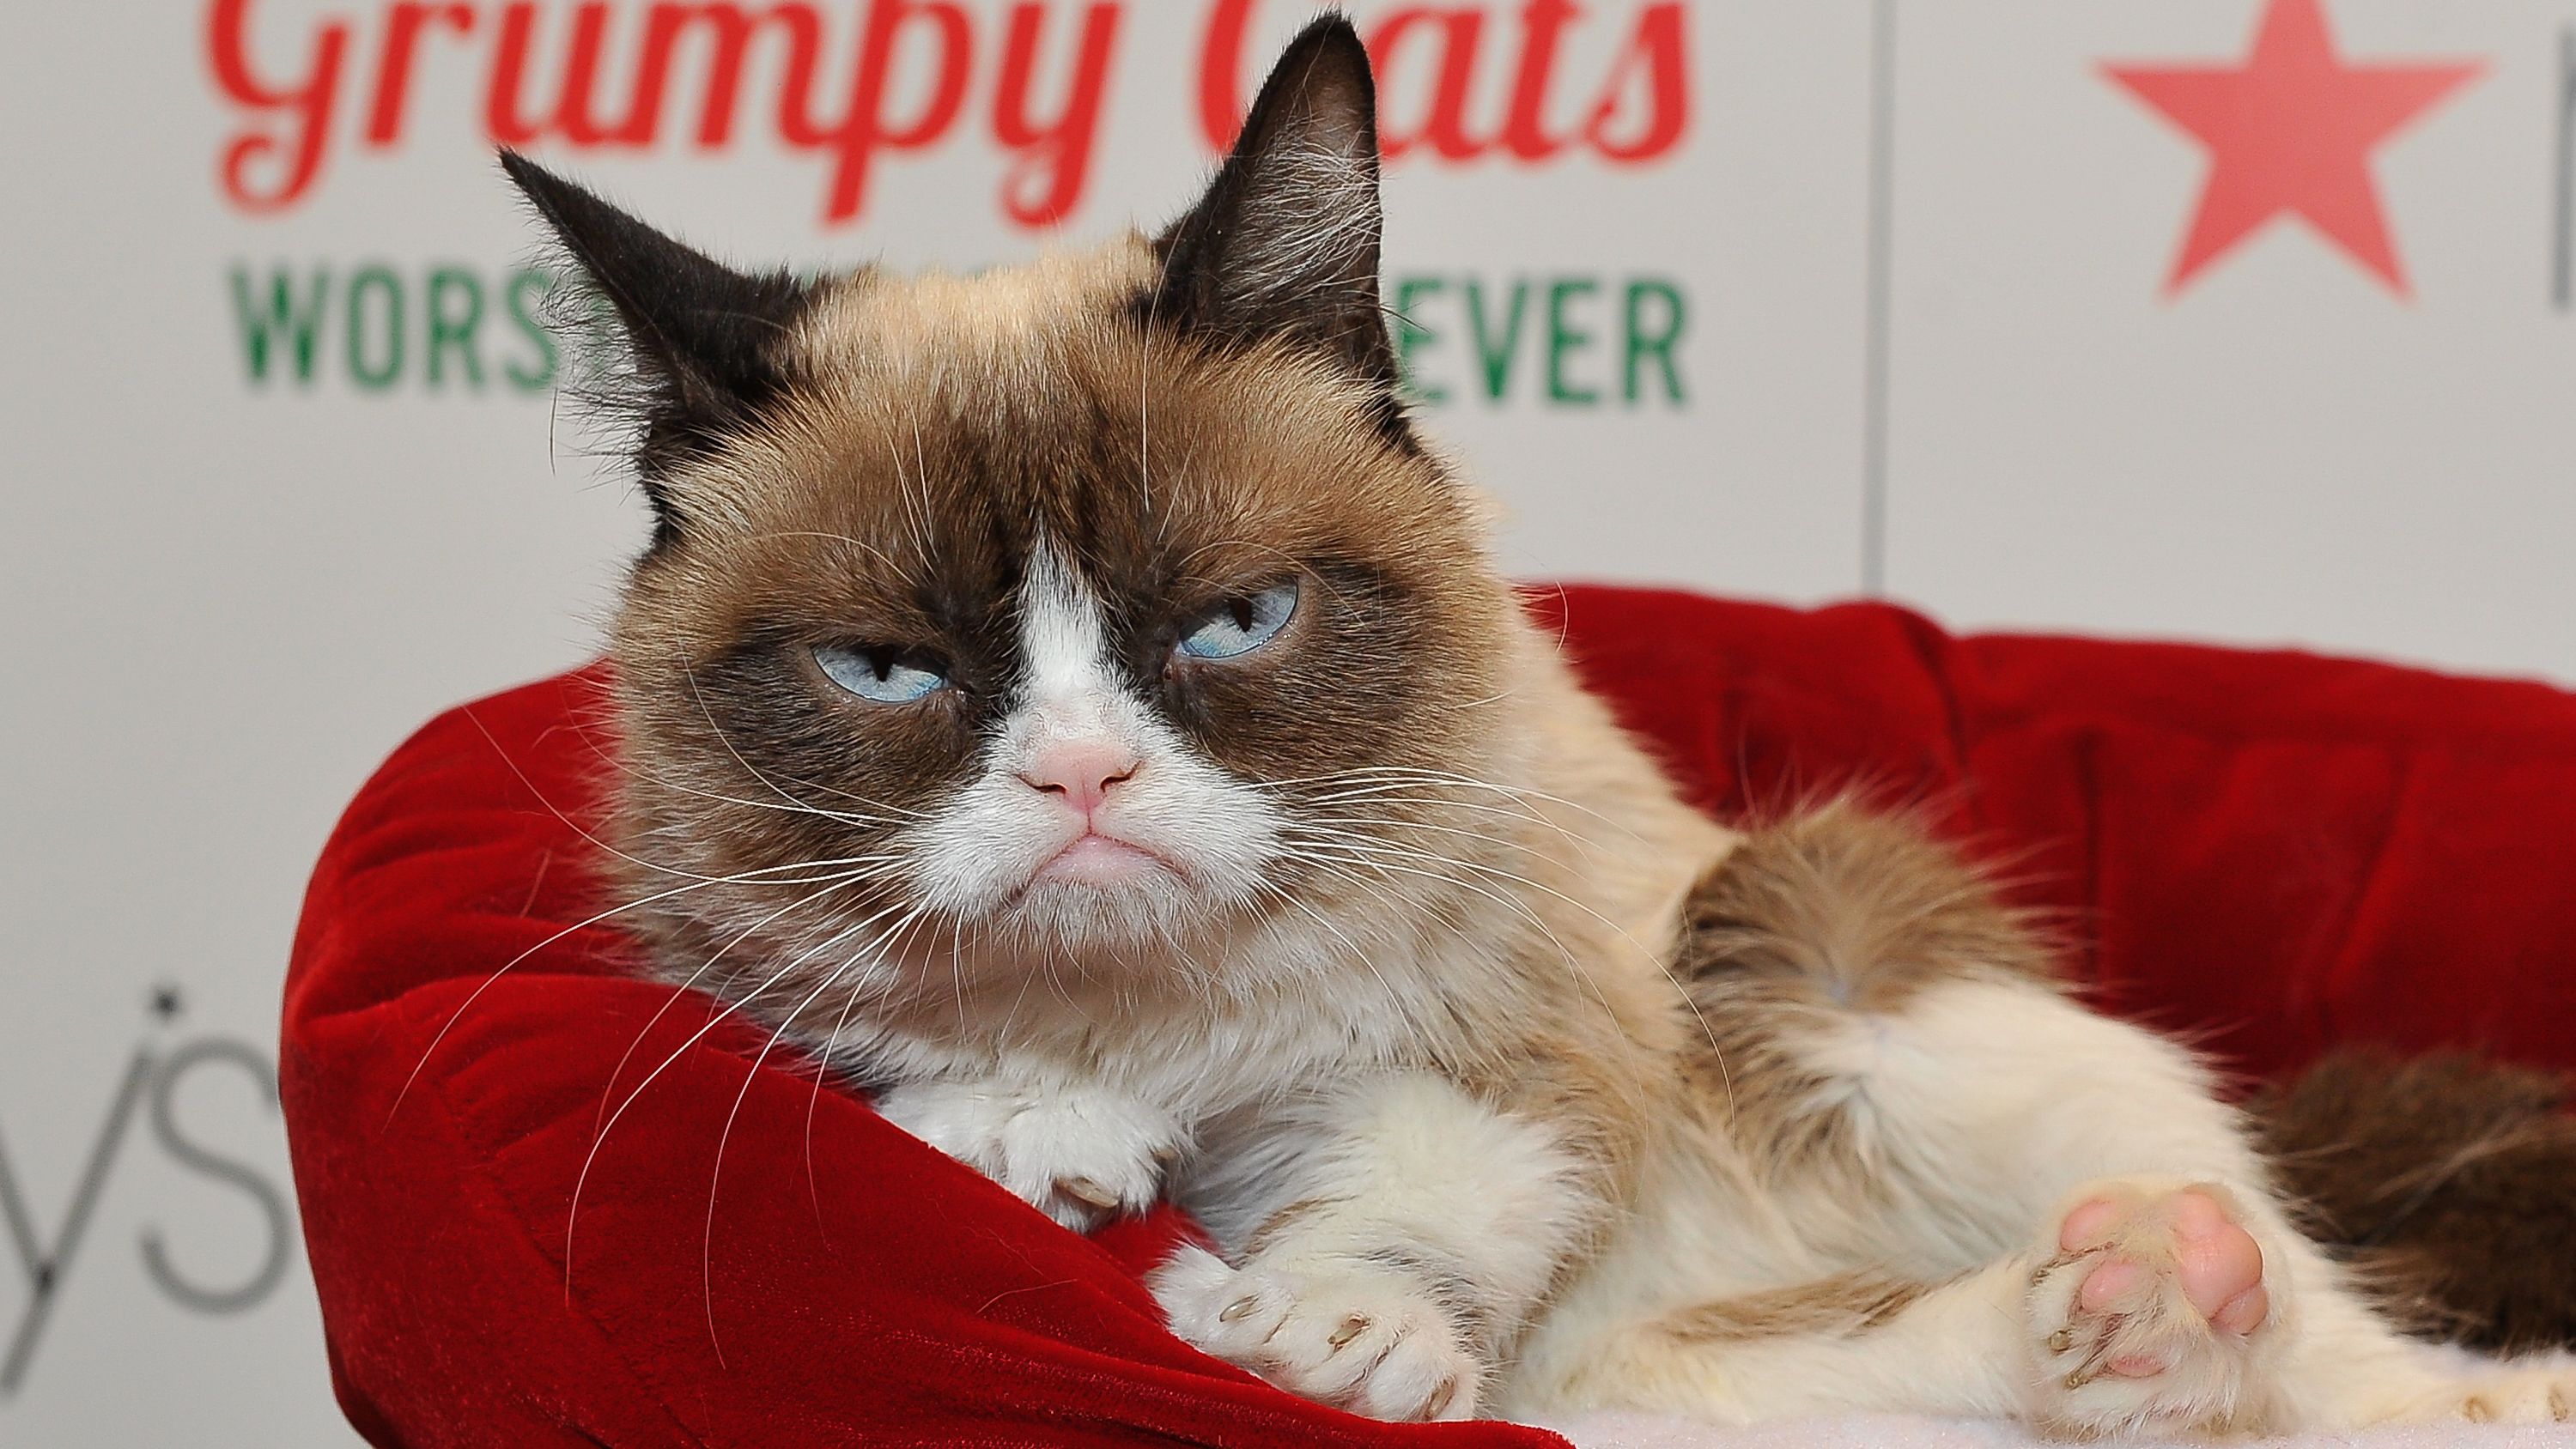 grumpy cat no work